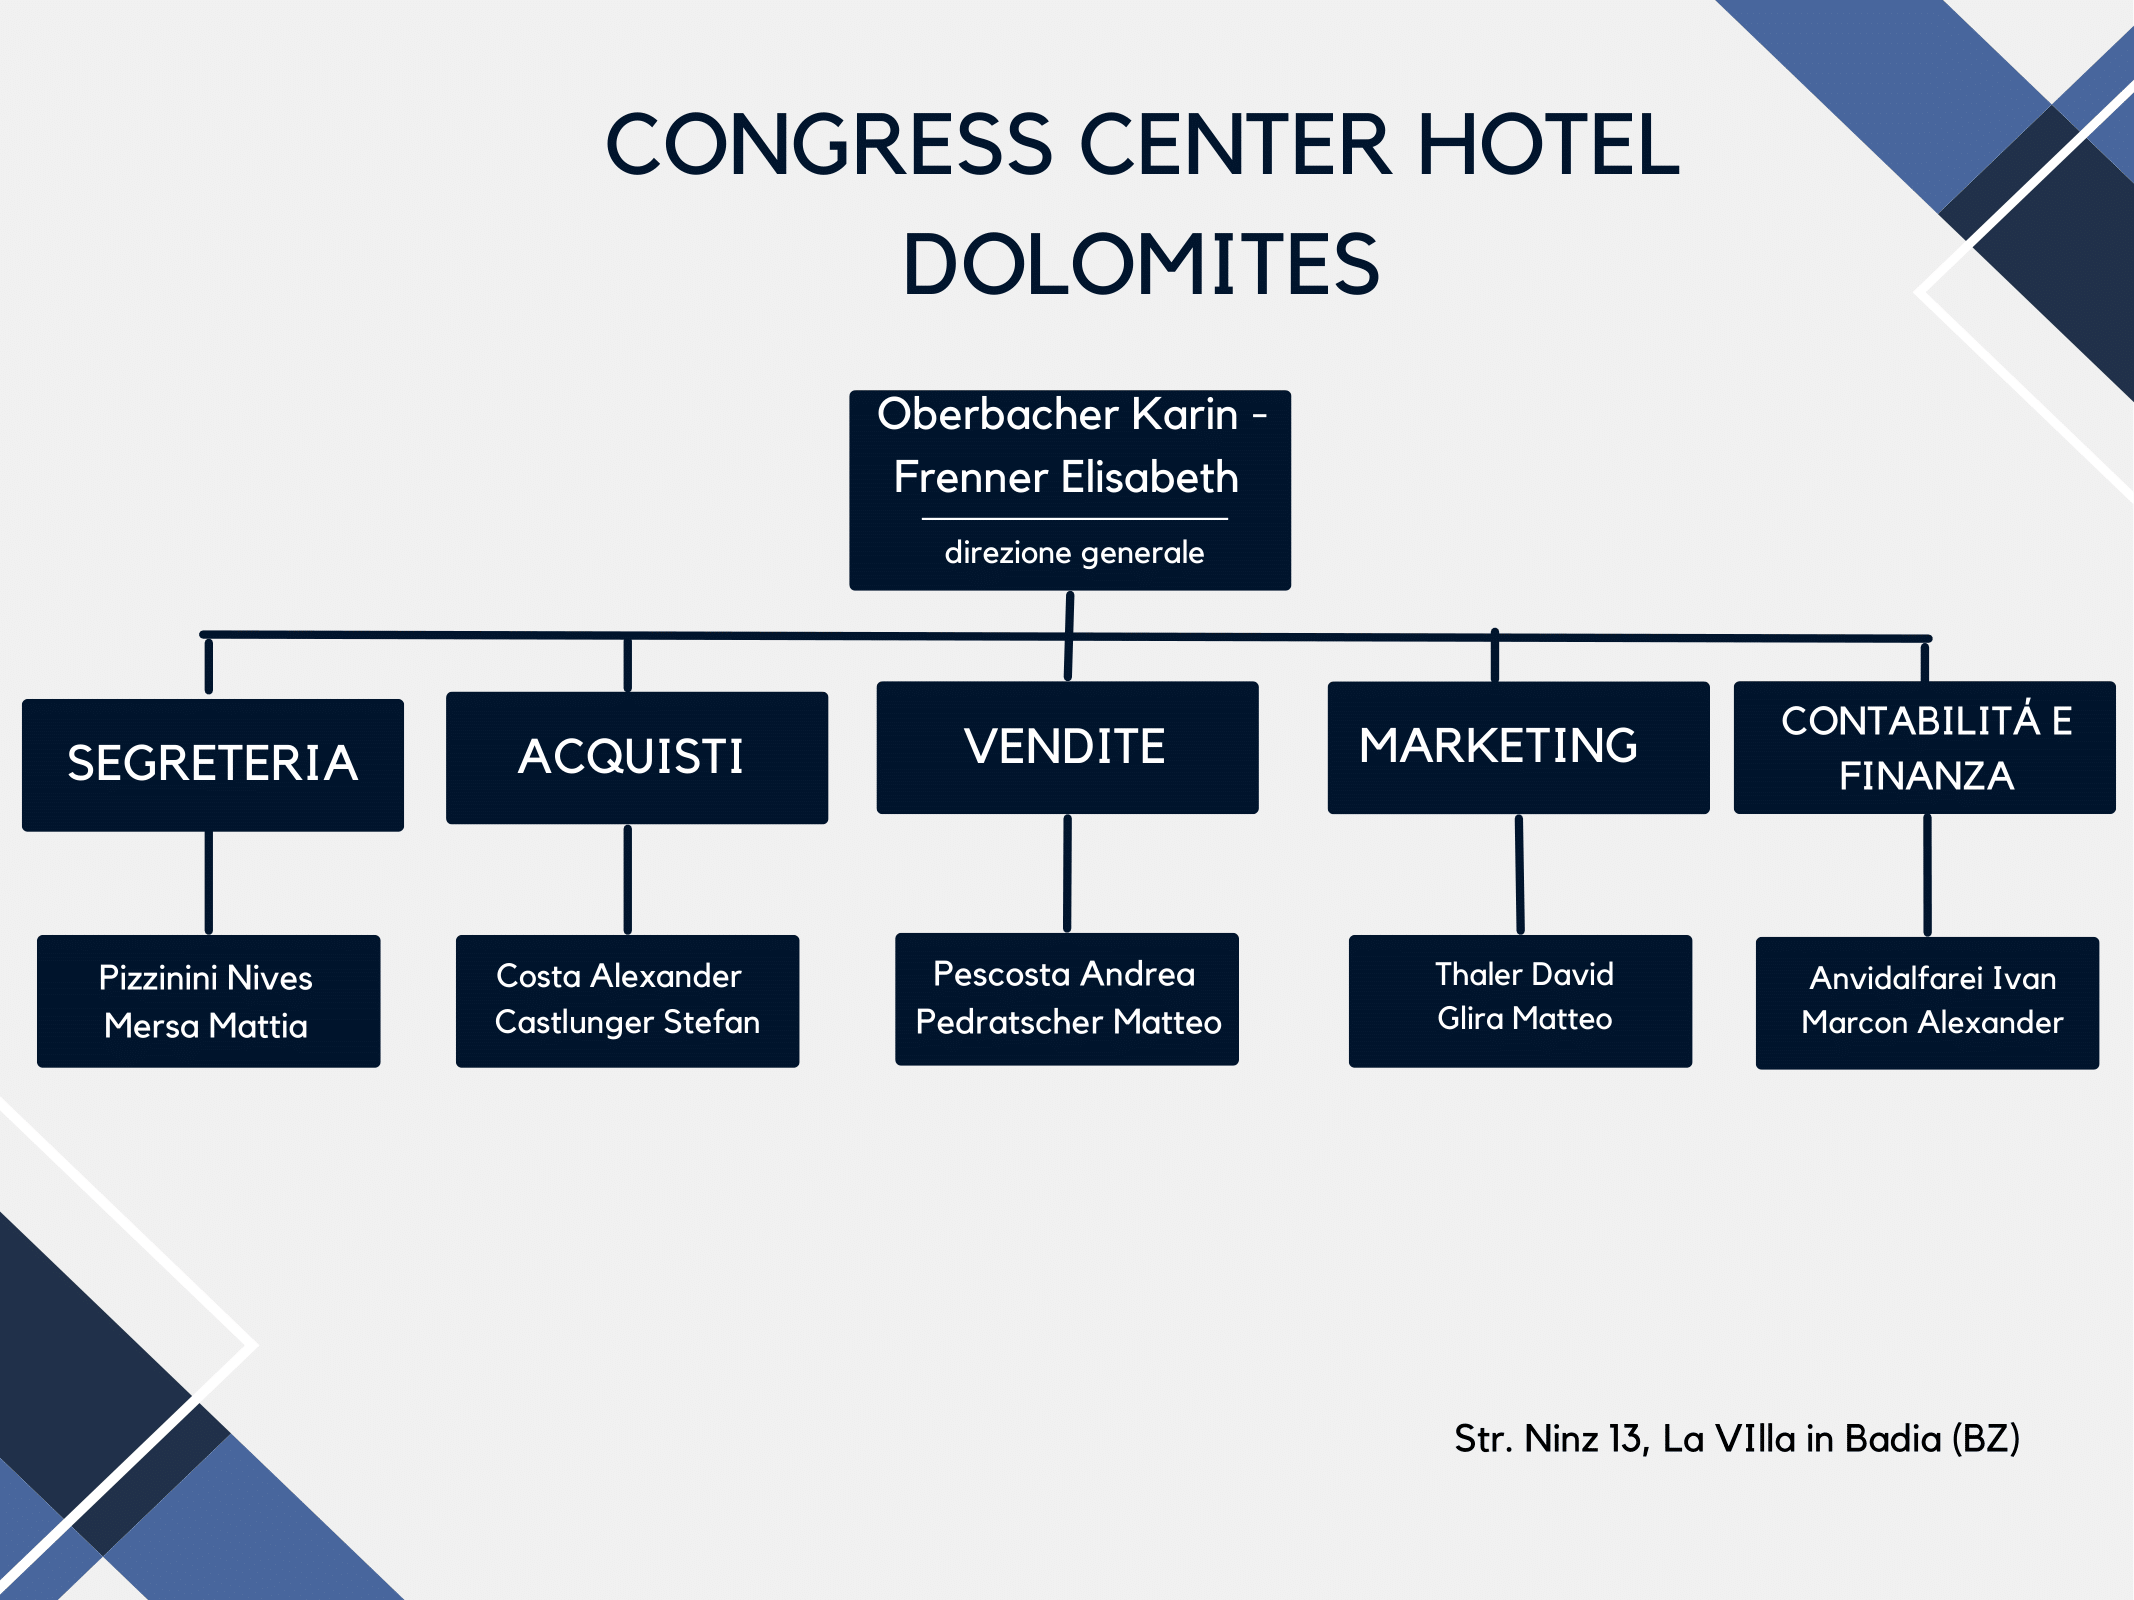 CONGRESS CENTER HOTEL DOLOMITES 2023